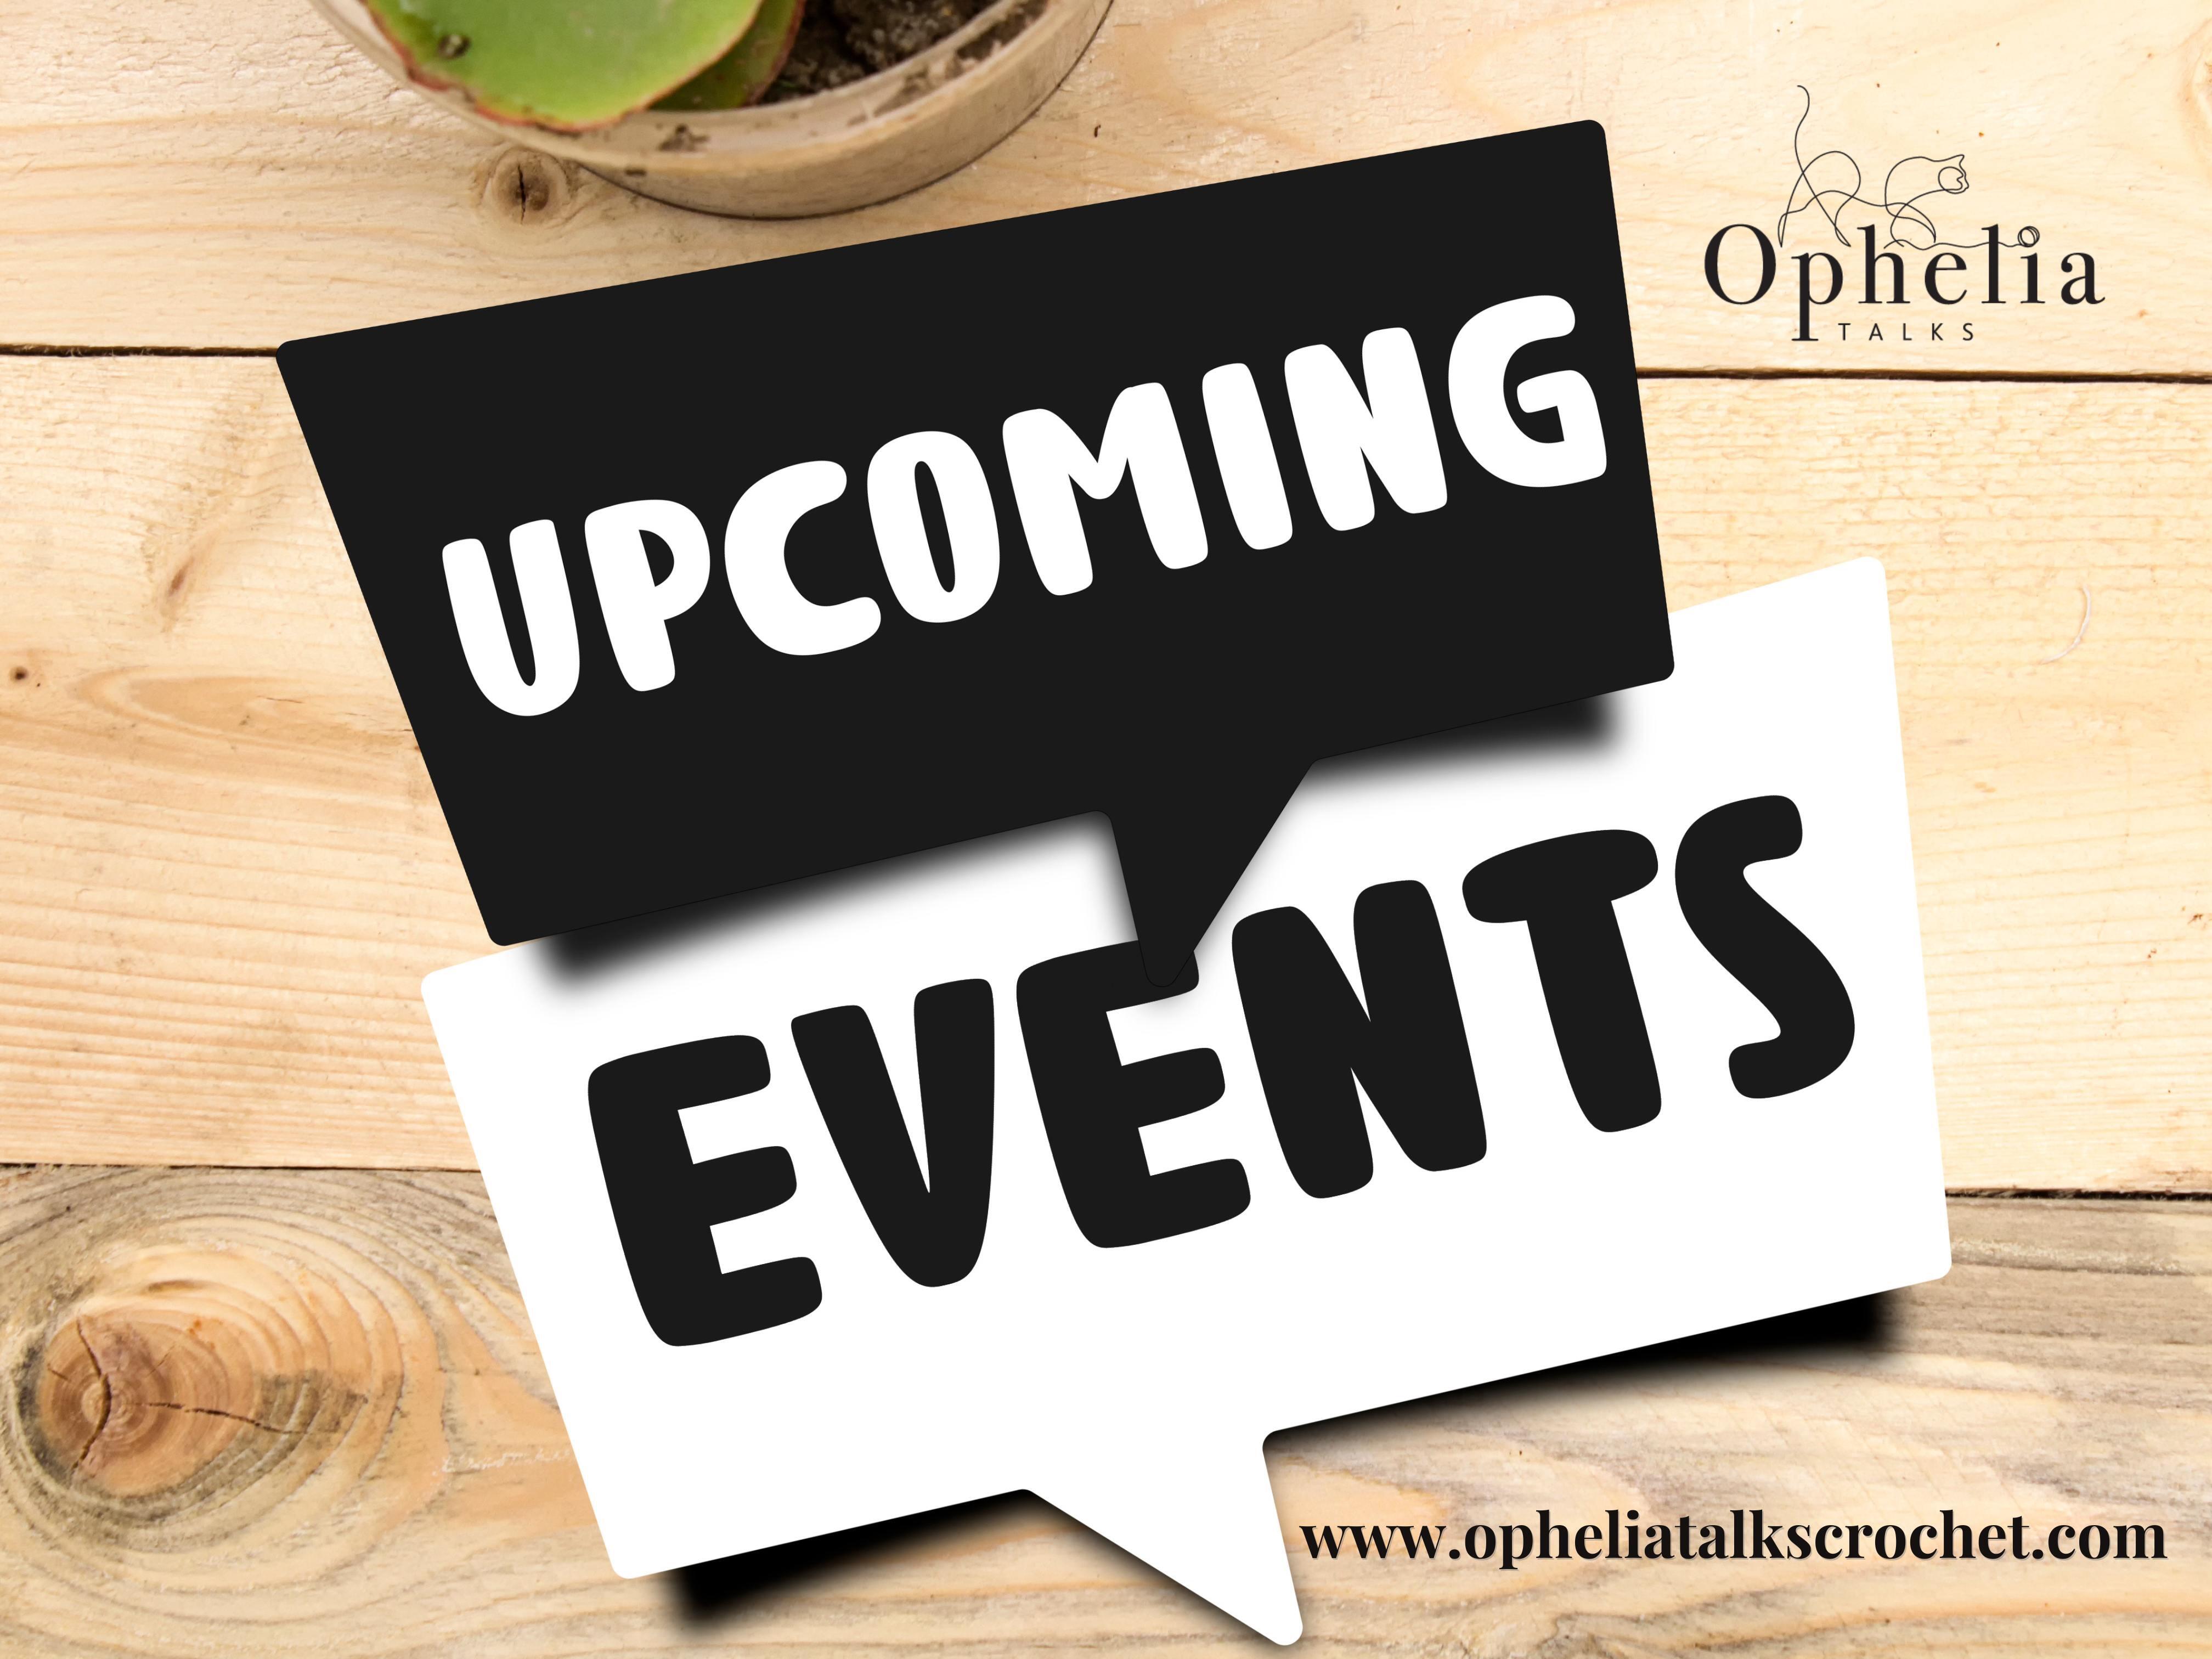 Upcoming ophelia talks crochet events